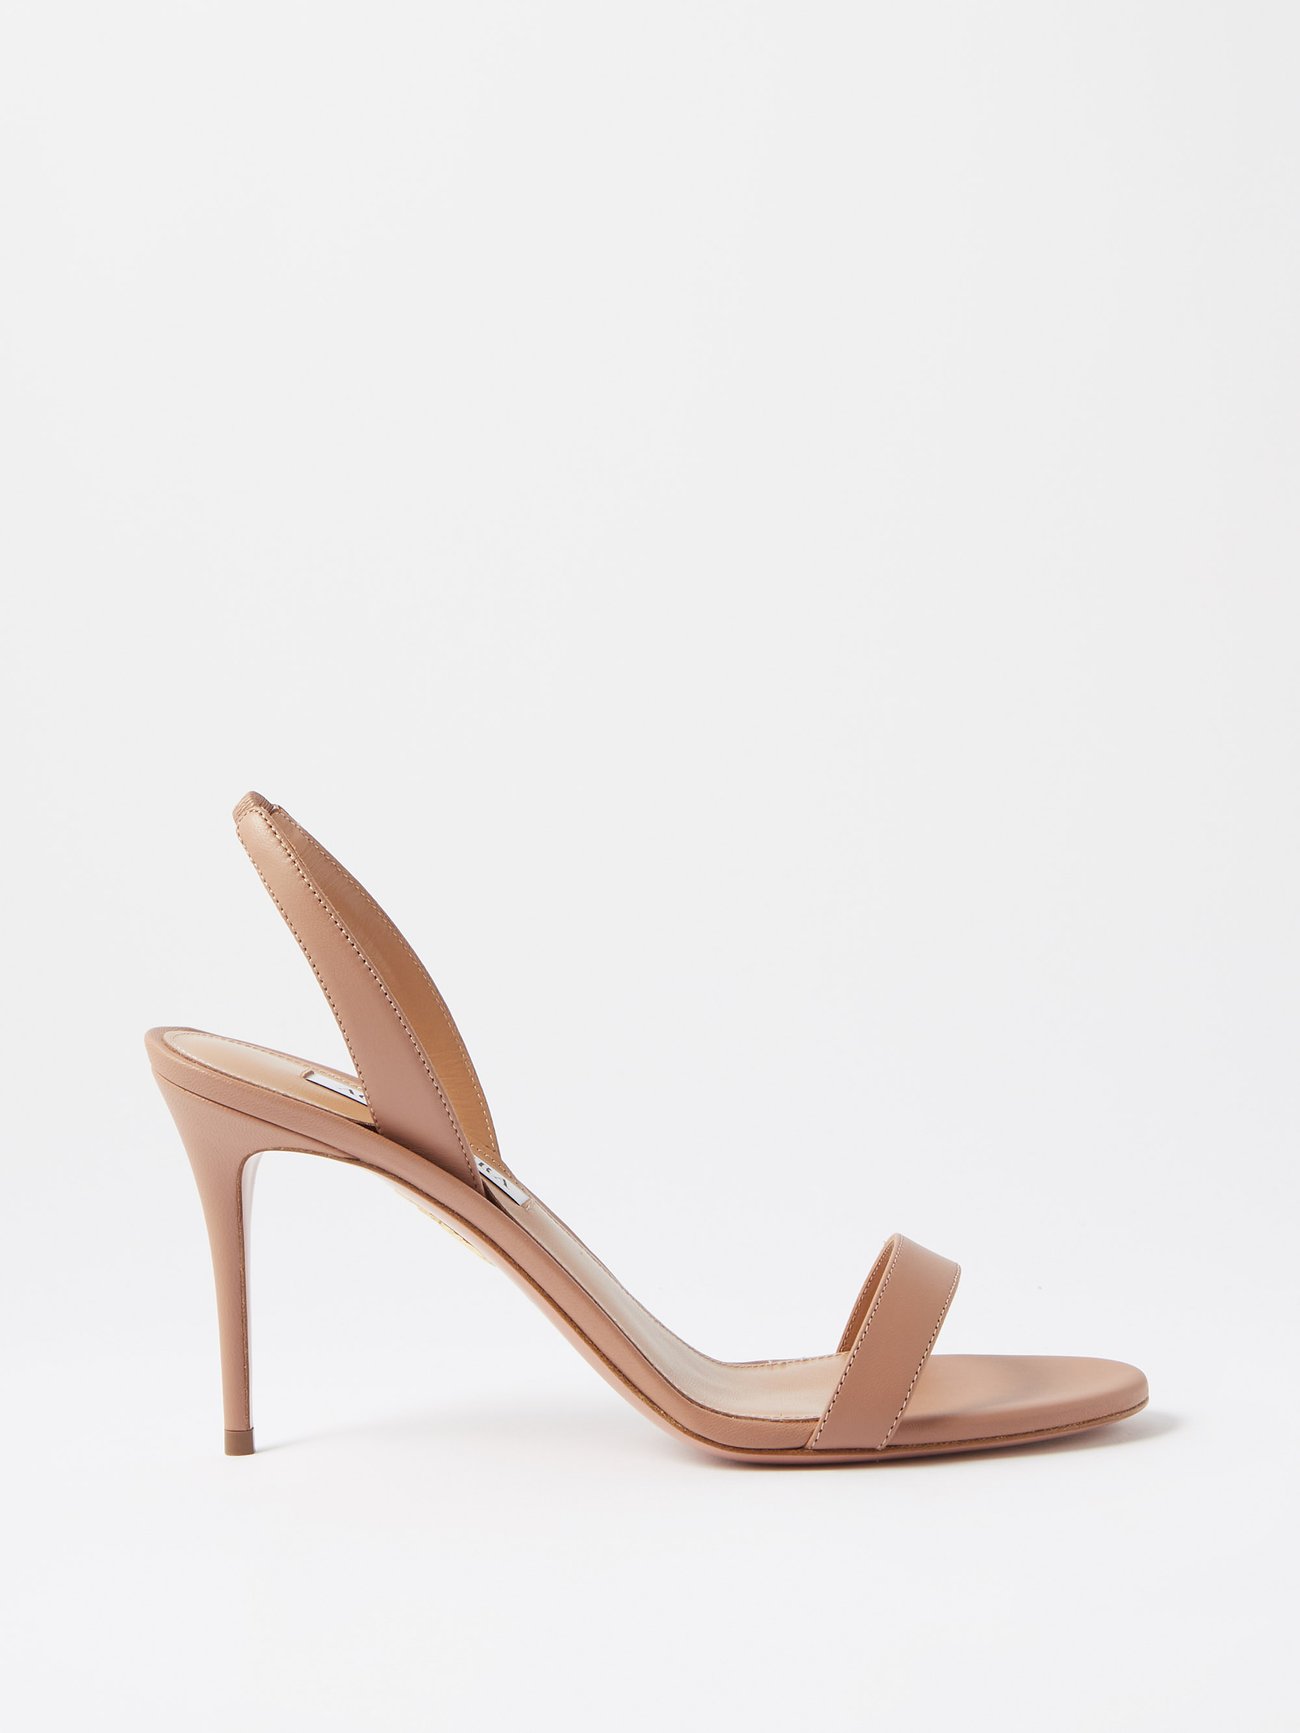 Beige So Nude 85 metallic-leather sandals | Aquazzura | MATCHES UK